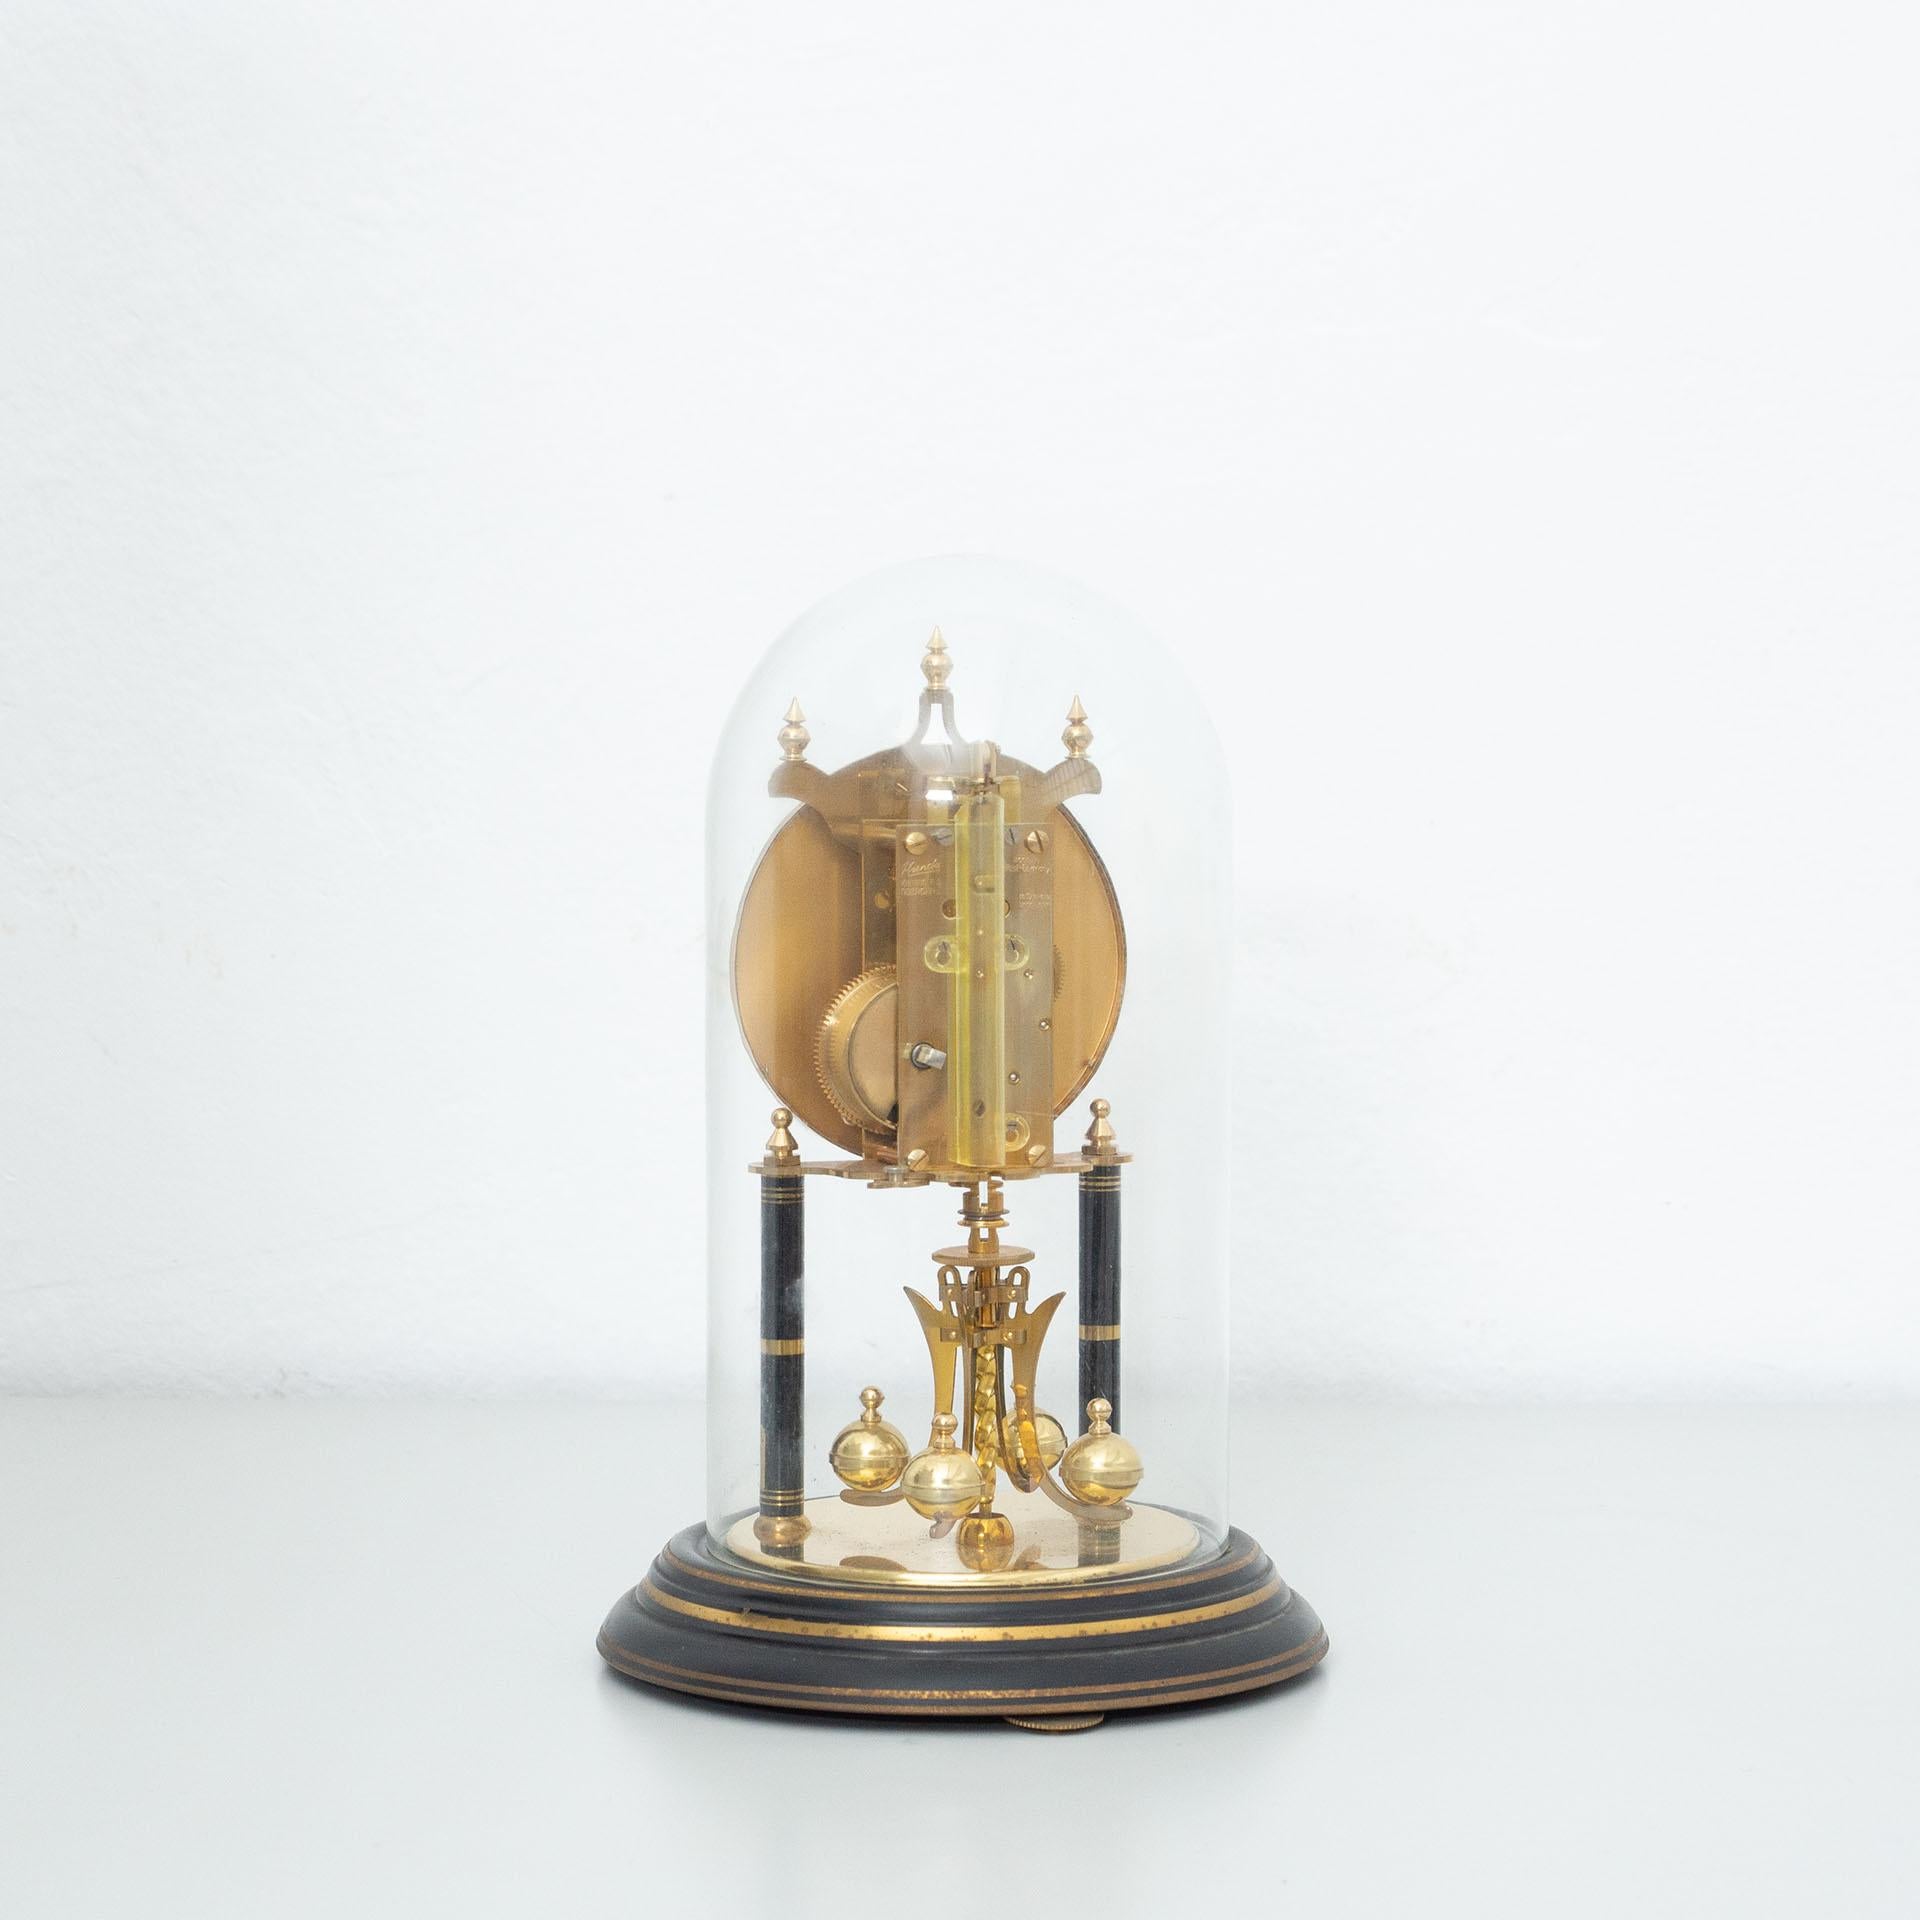 German 20th Century Atmos Kendo Table Clock, circa 1950